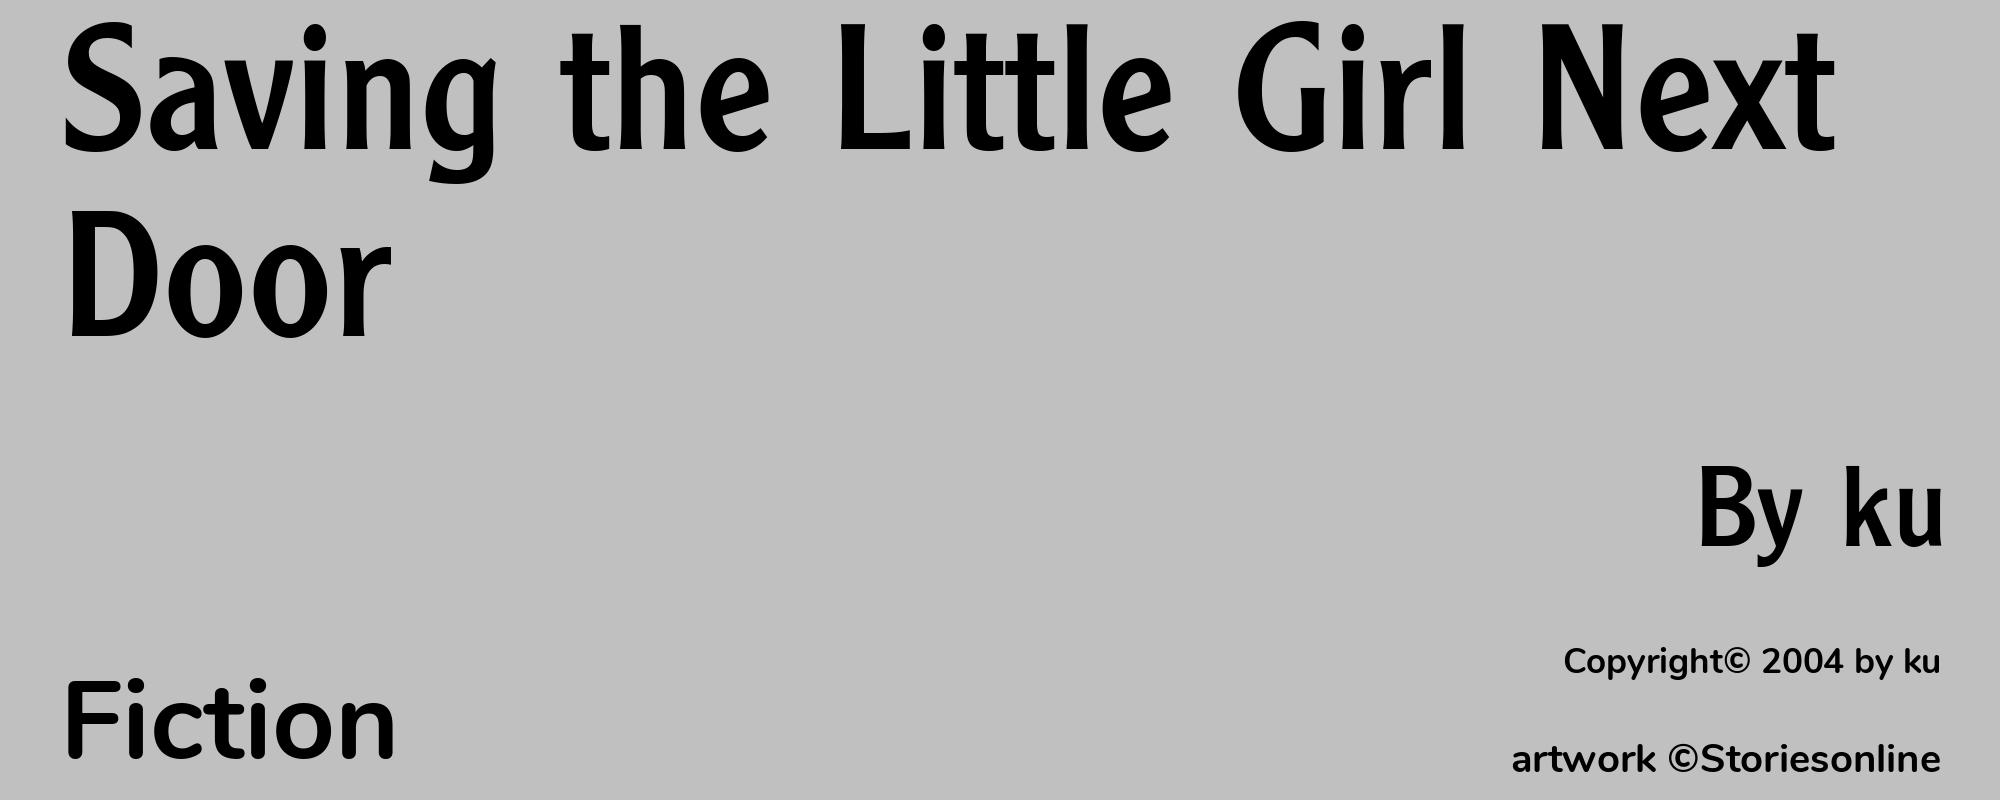 Saving the Little Girl Next Door - Cover